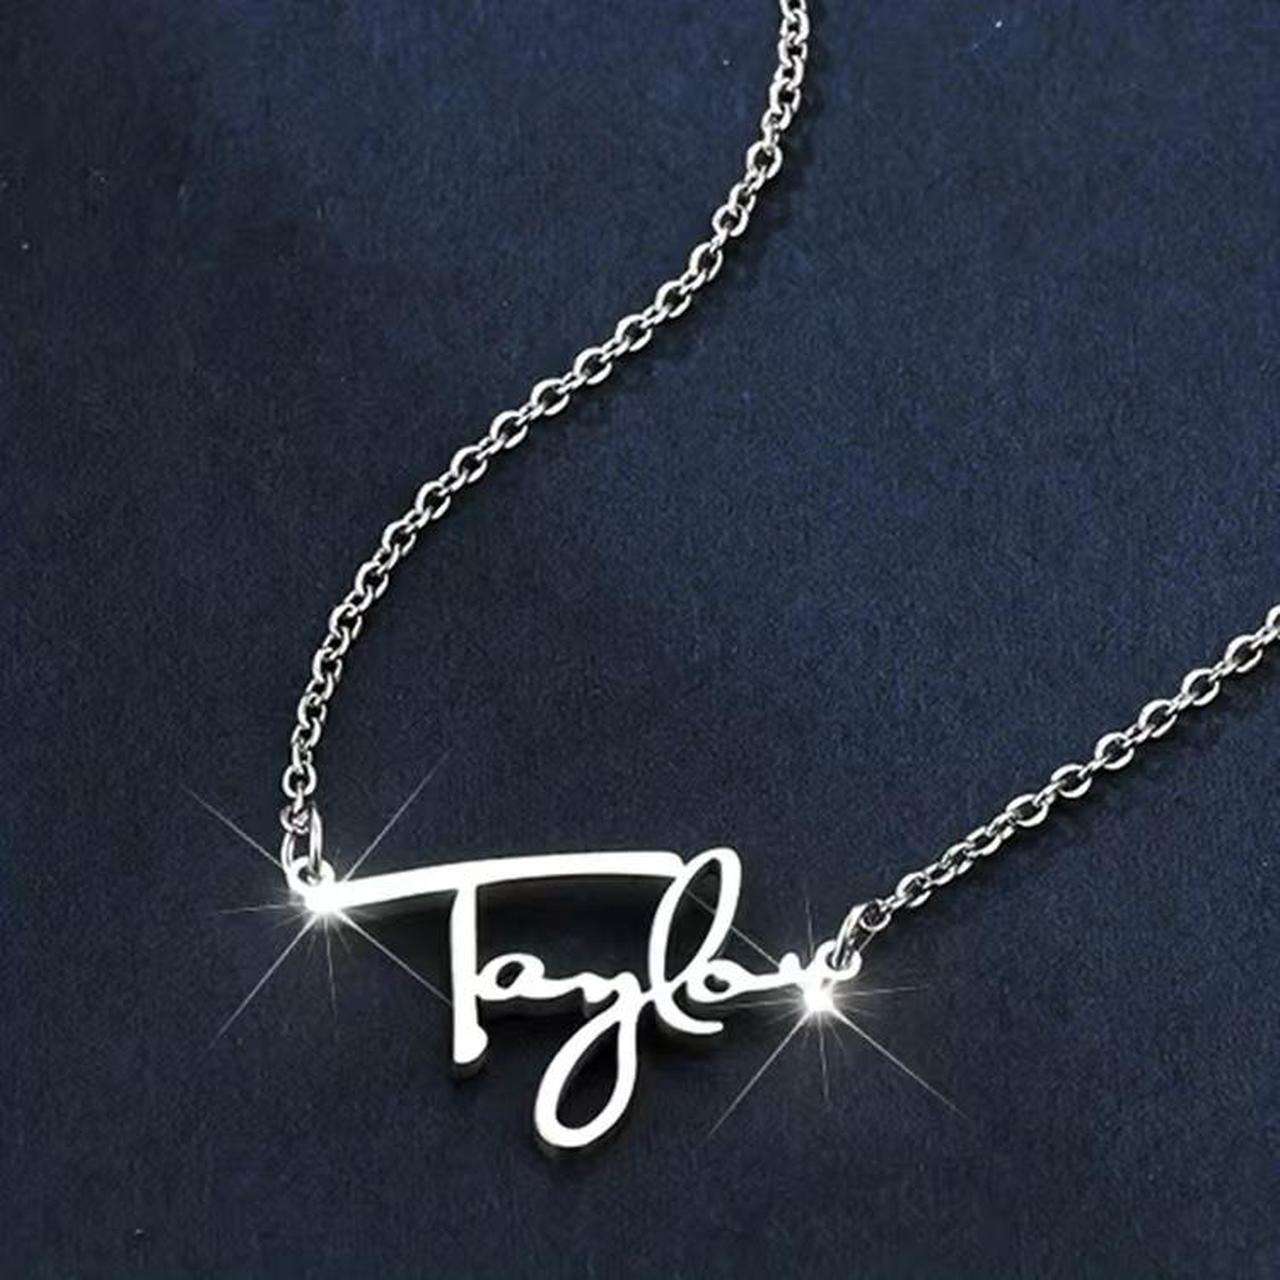 “Taylor” Taylor Swift necklace 🦋 ⭐️ brand new ⭐️... - Depop